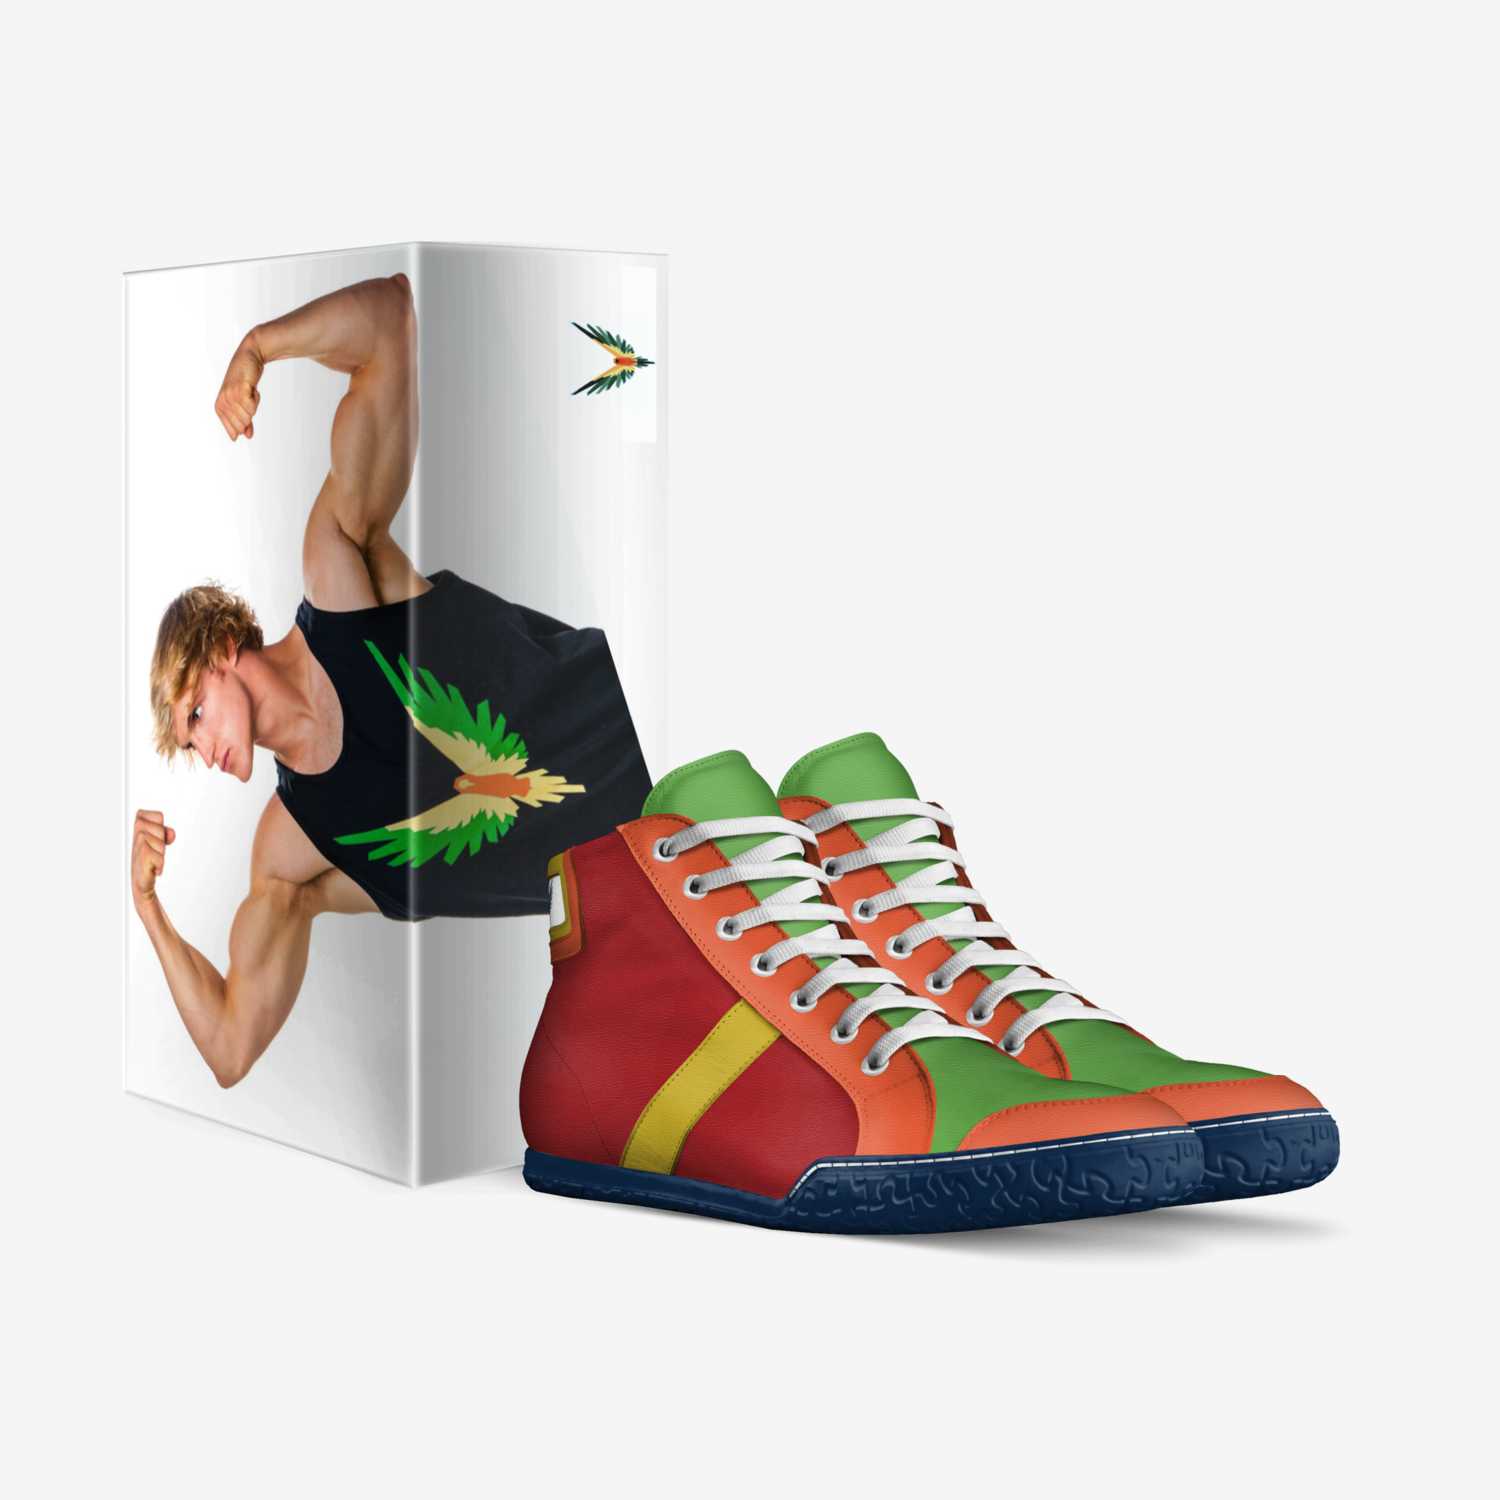 Maverick custom made in Italy shoes by Dj Bonales | Box view